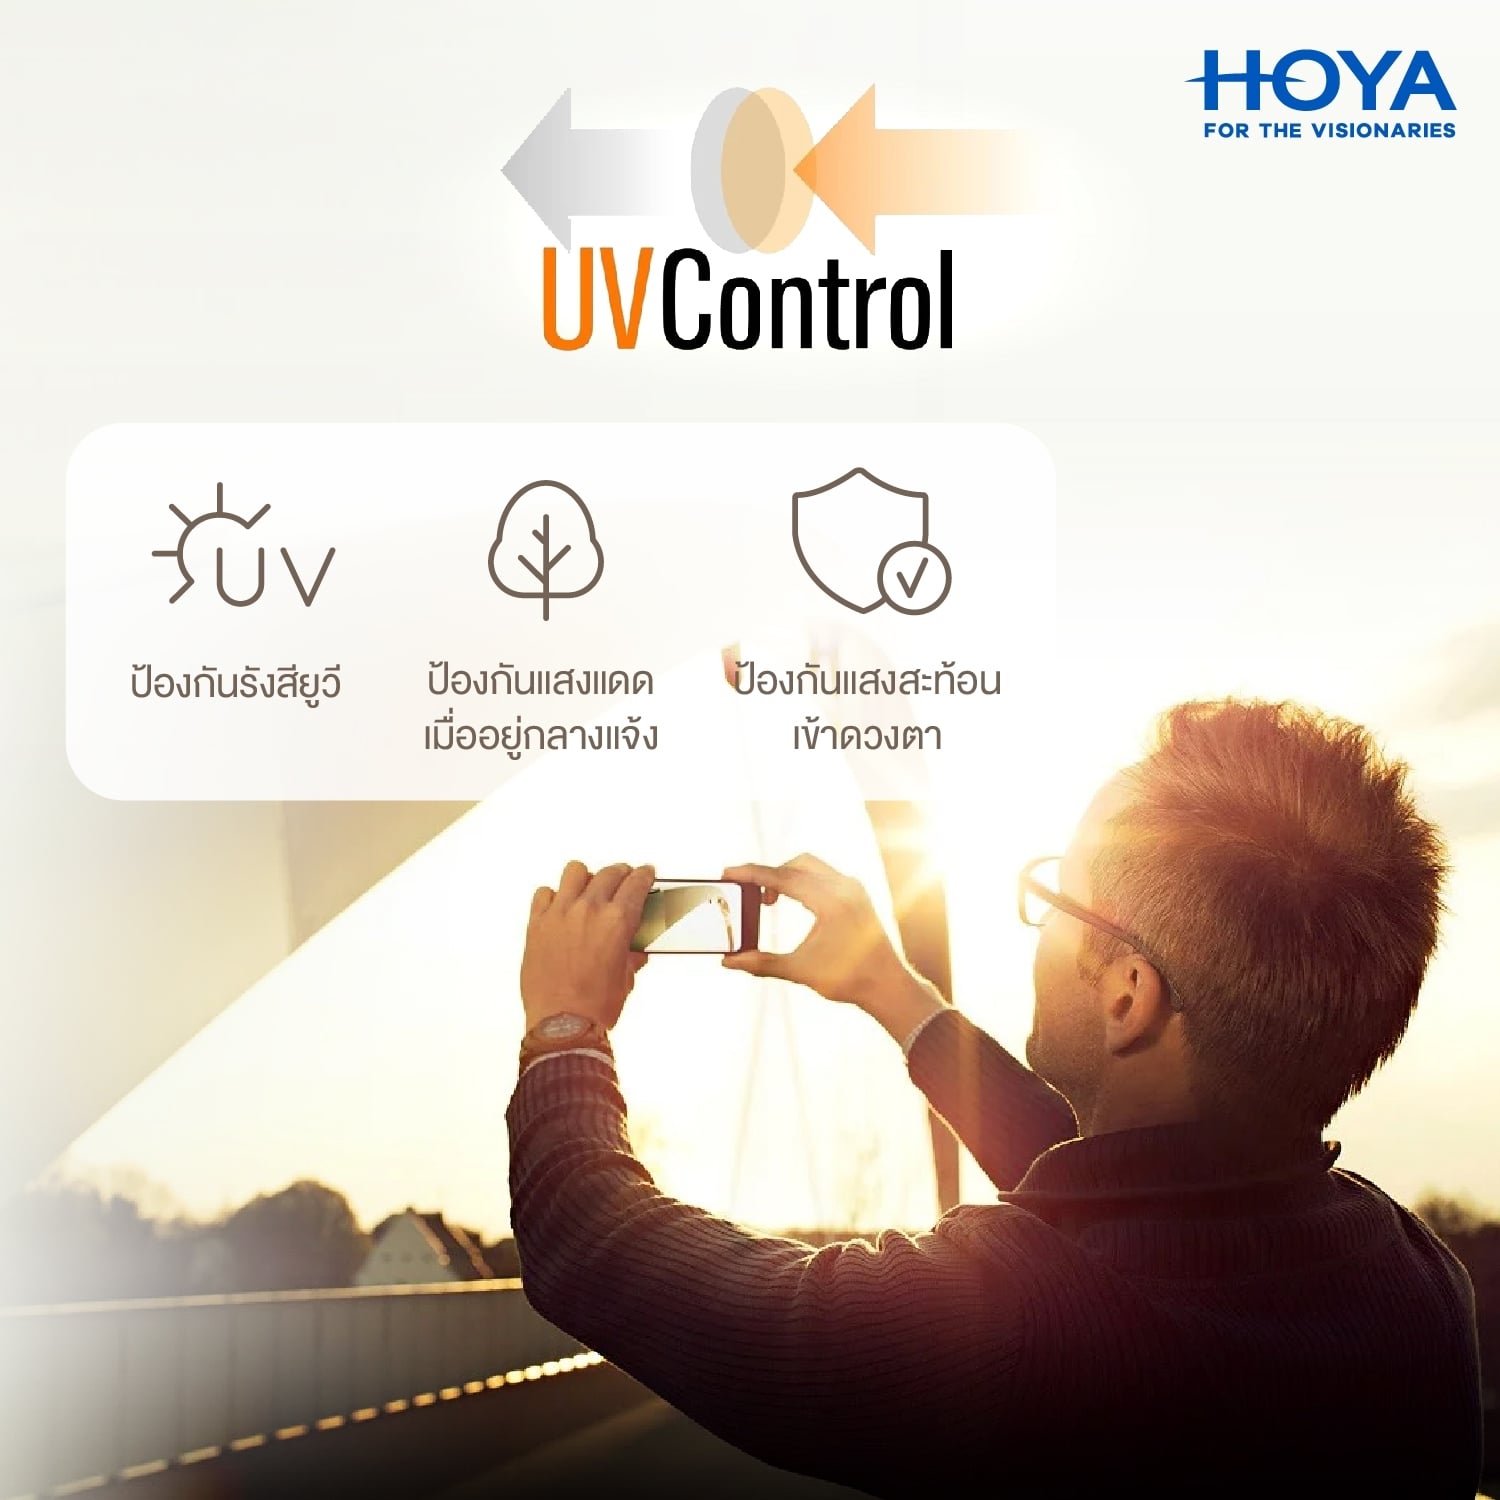 hoya-UV-control